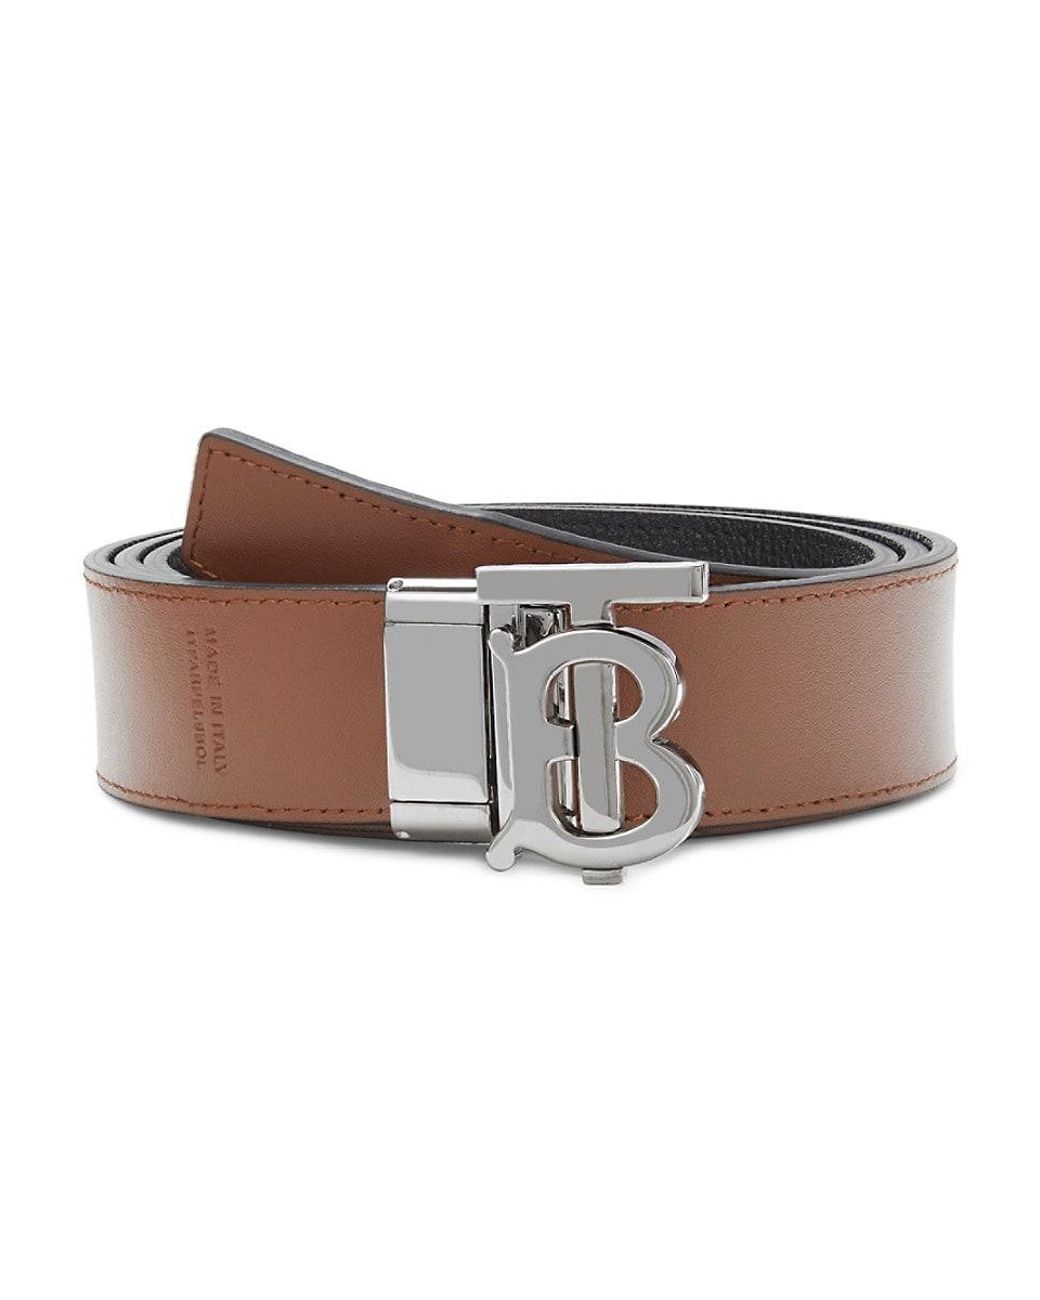 Burberry Slide Buckle Reversible Leather Belt on SALE